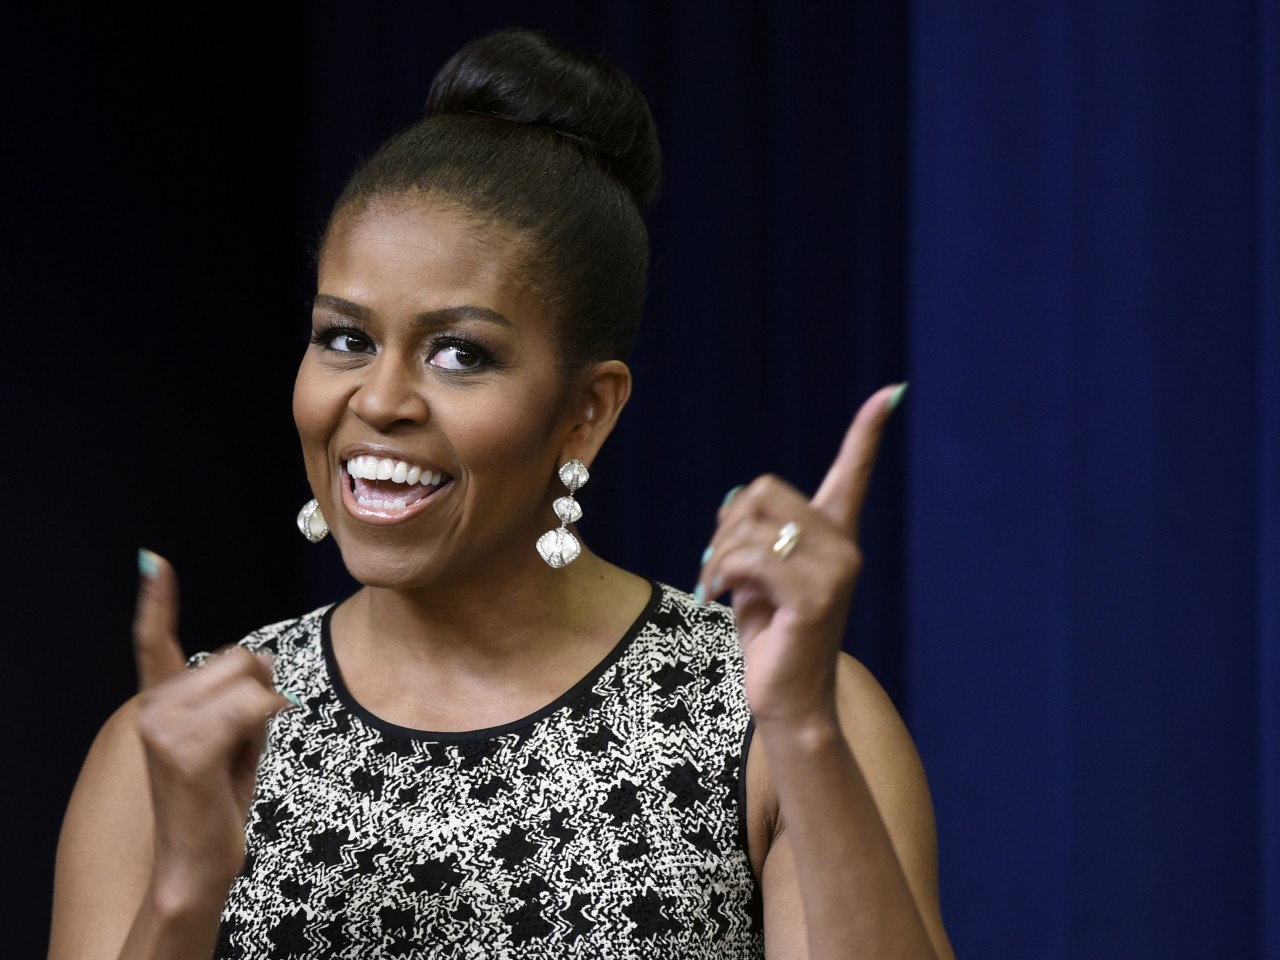 Michelle Obama Backgrounds, Compatible - PC, Mobile, Gadgets| 1280x960 px